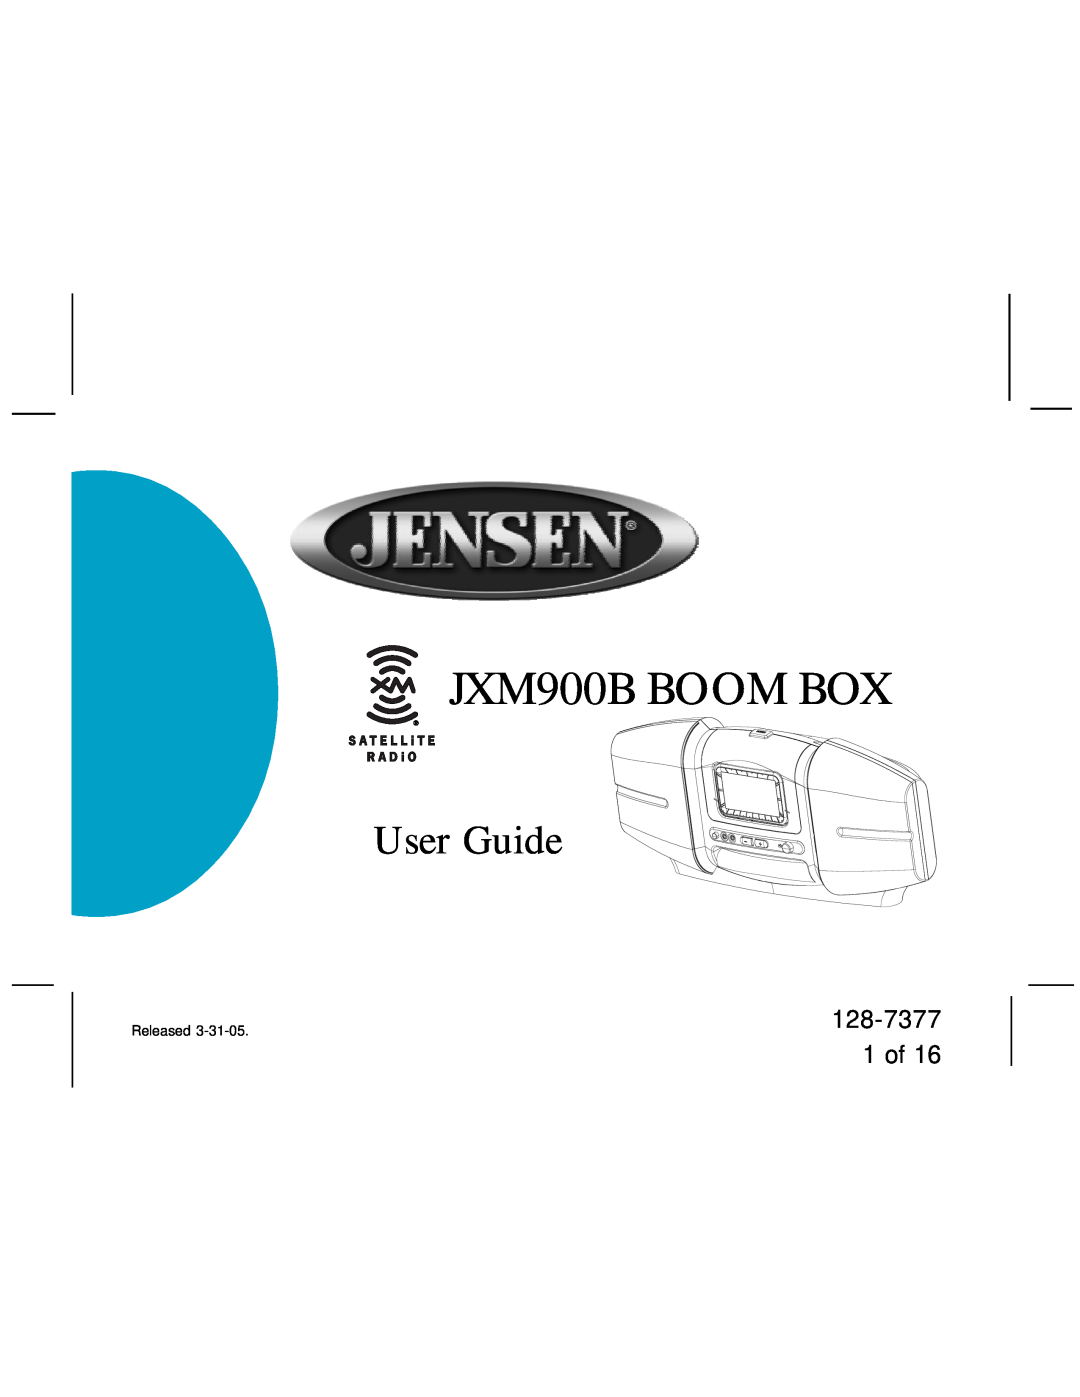 Jensen manual 128-7377 1 of, JXM900B BOOM BOX, User Guide 